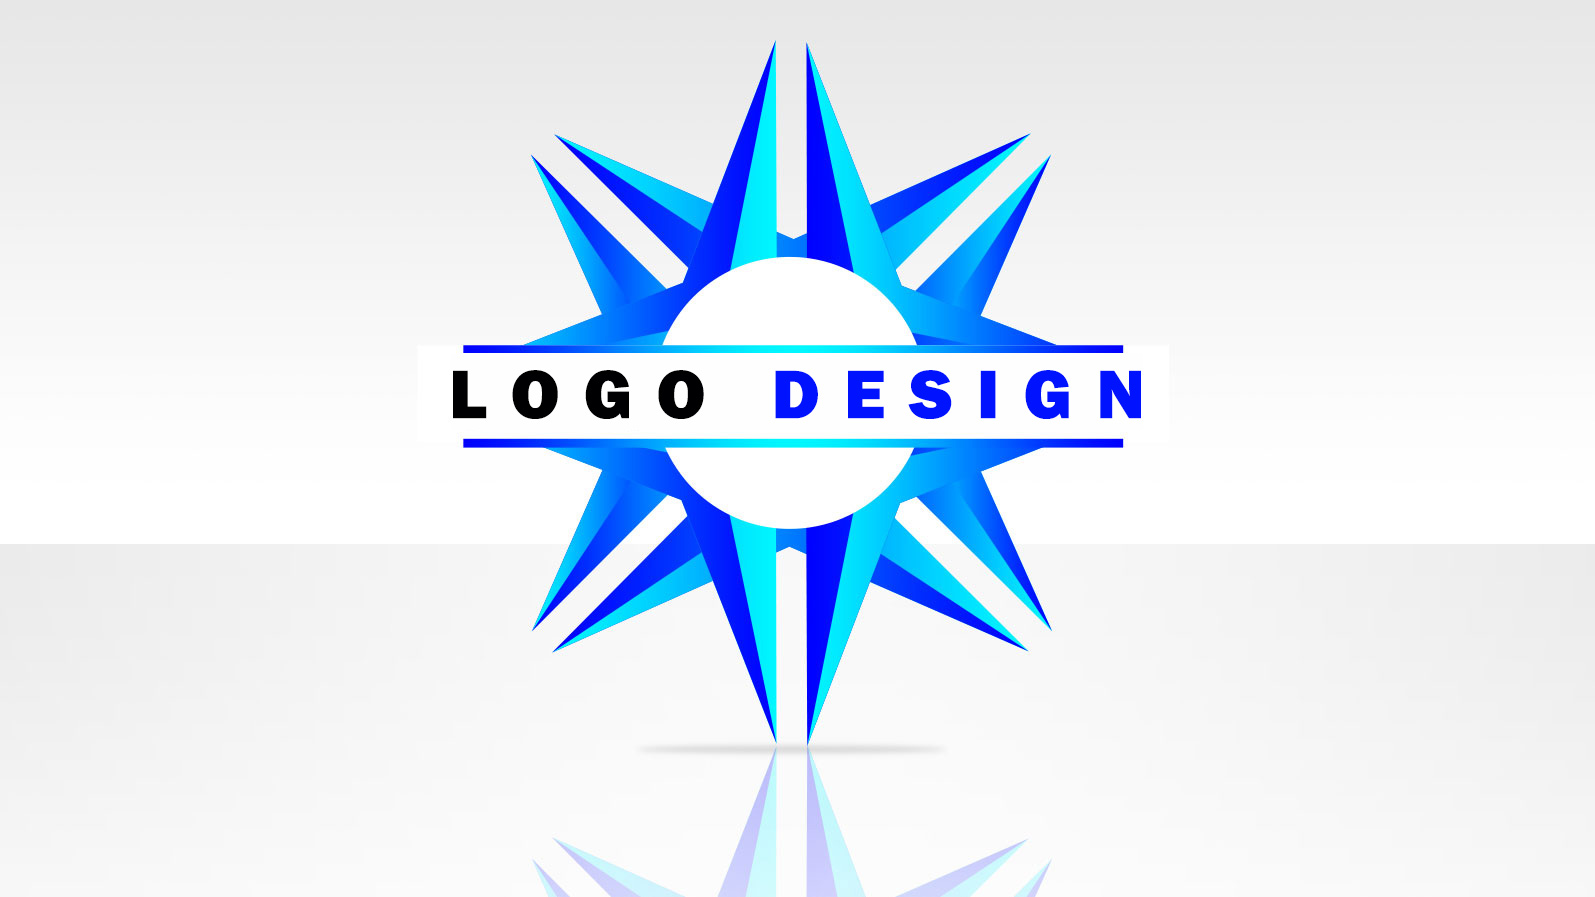 professional logo design in photoshop